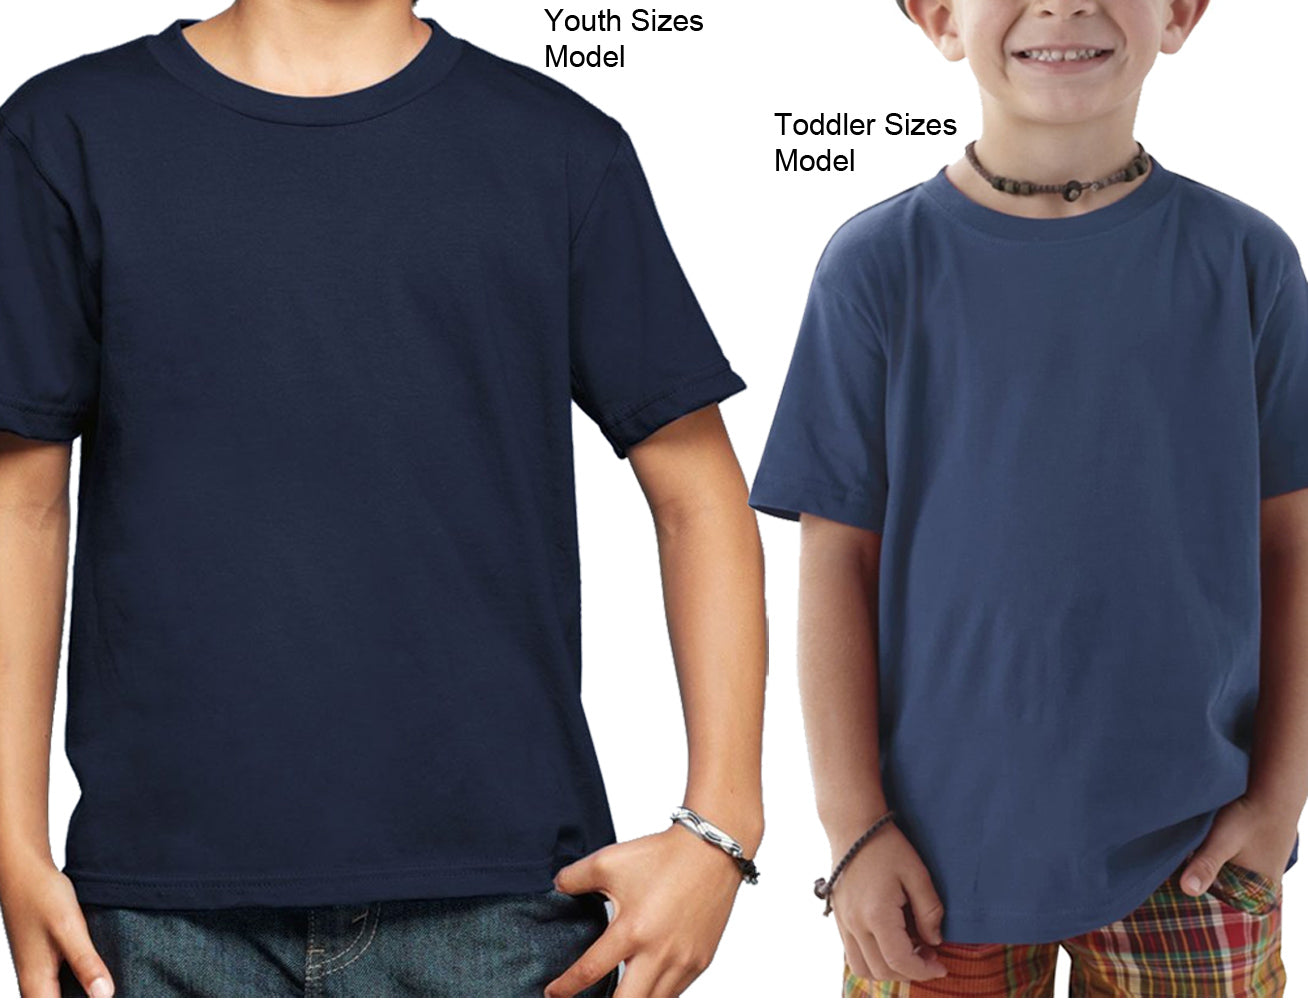 Boy's Vintage Massachusetts T-Shirt